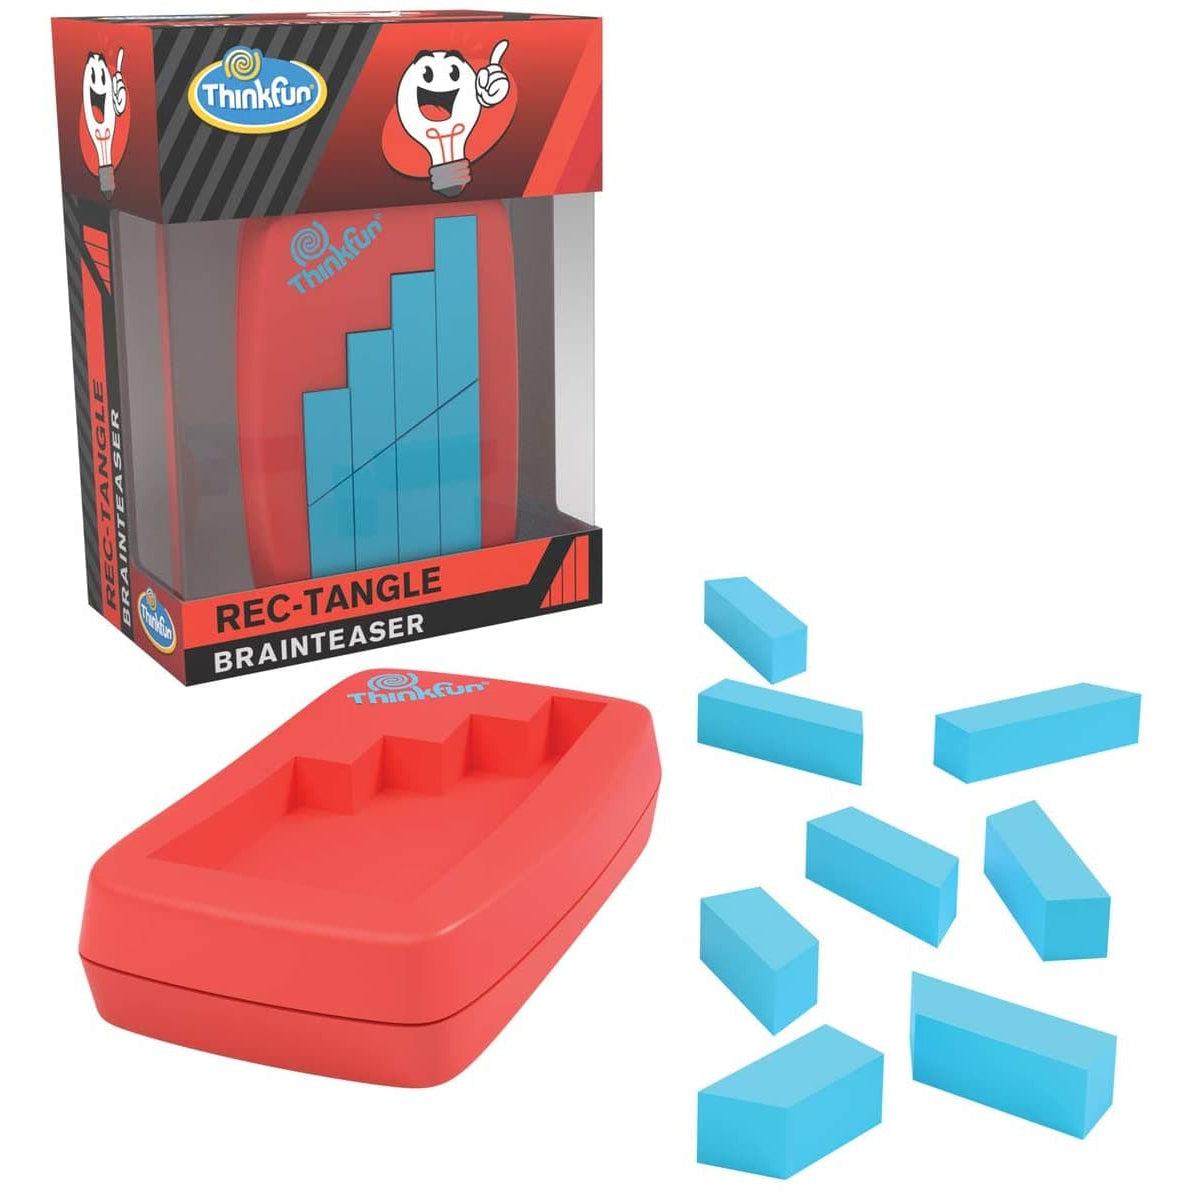 Think Fun-Thinkfun Pocket Brainteasers-12766-Rec-Tangle Puzzle Game-Legacy Toys